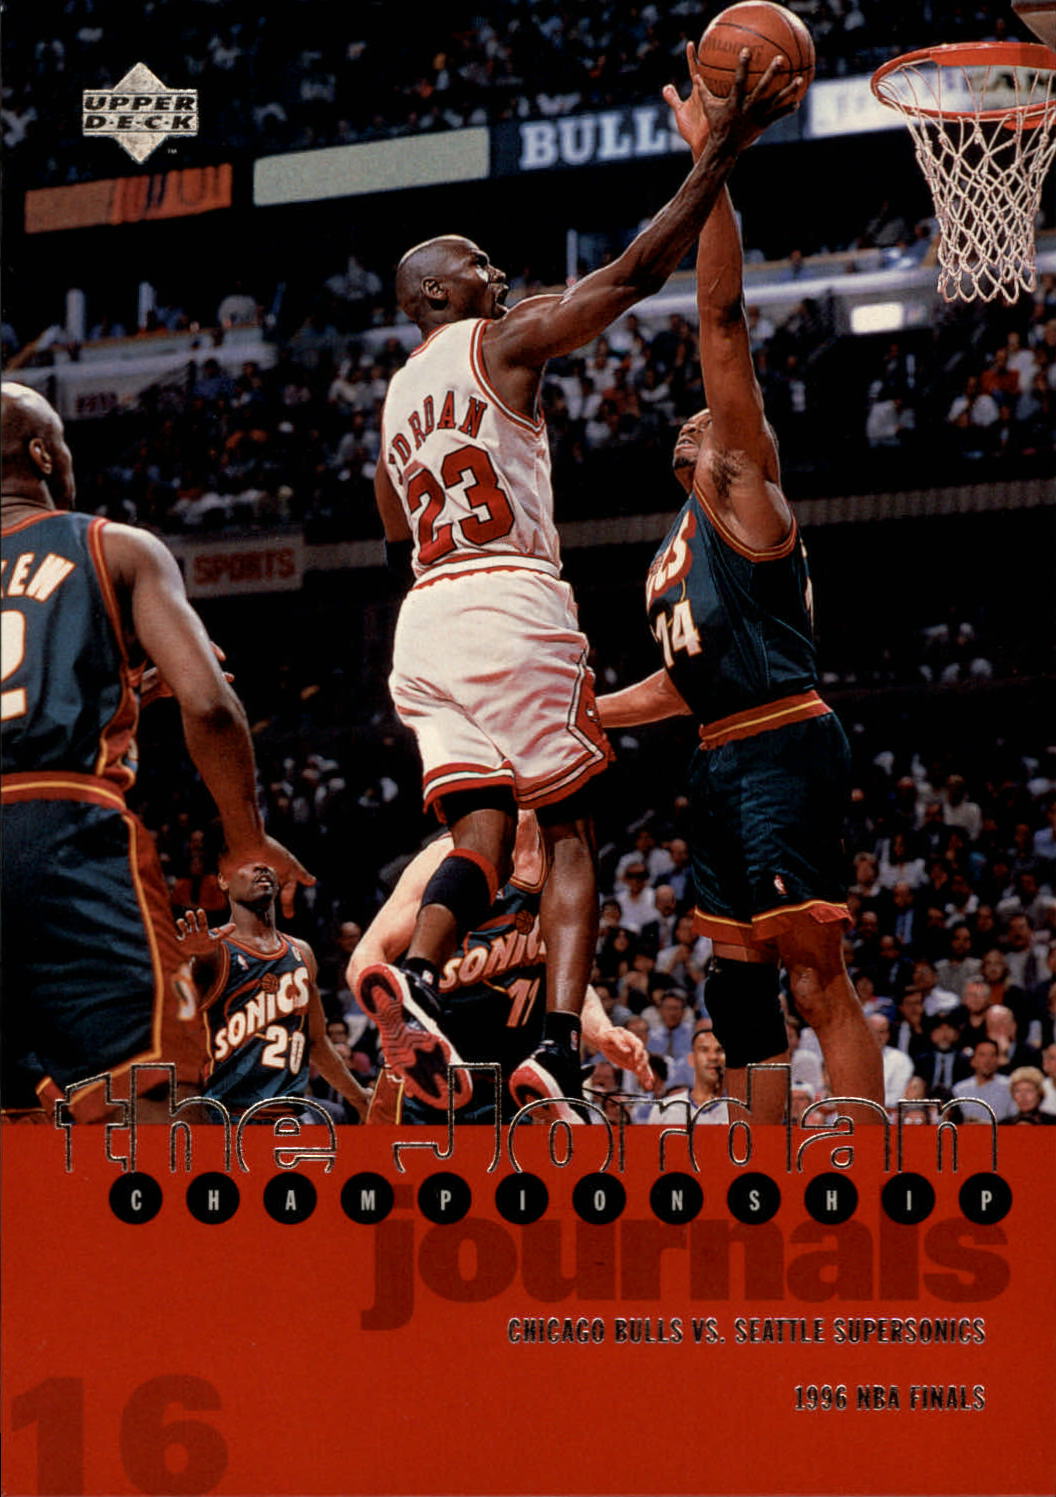 1997 Upper Deck Michael Jordan Championship Journals #16 Michael Jordan/Journal 1996, versus Seattle